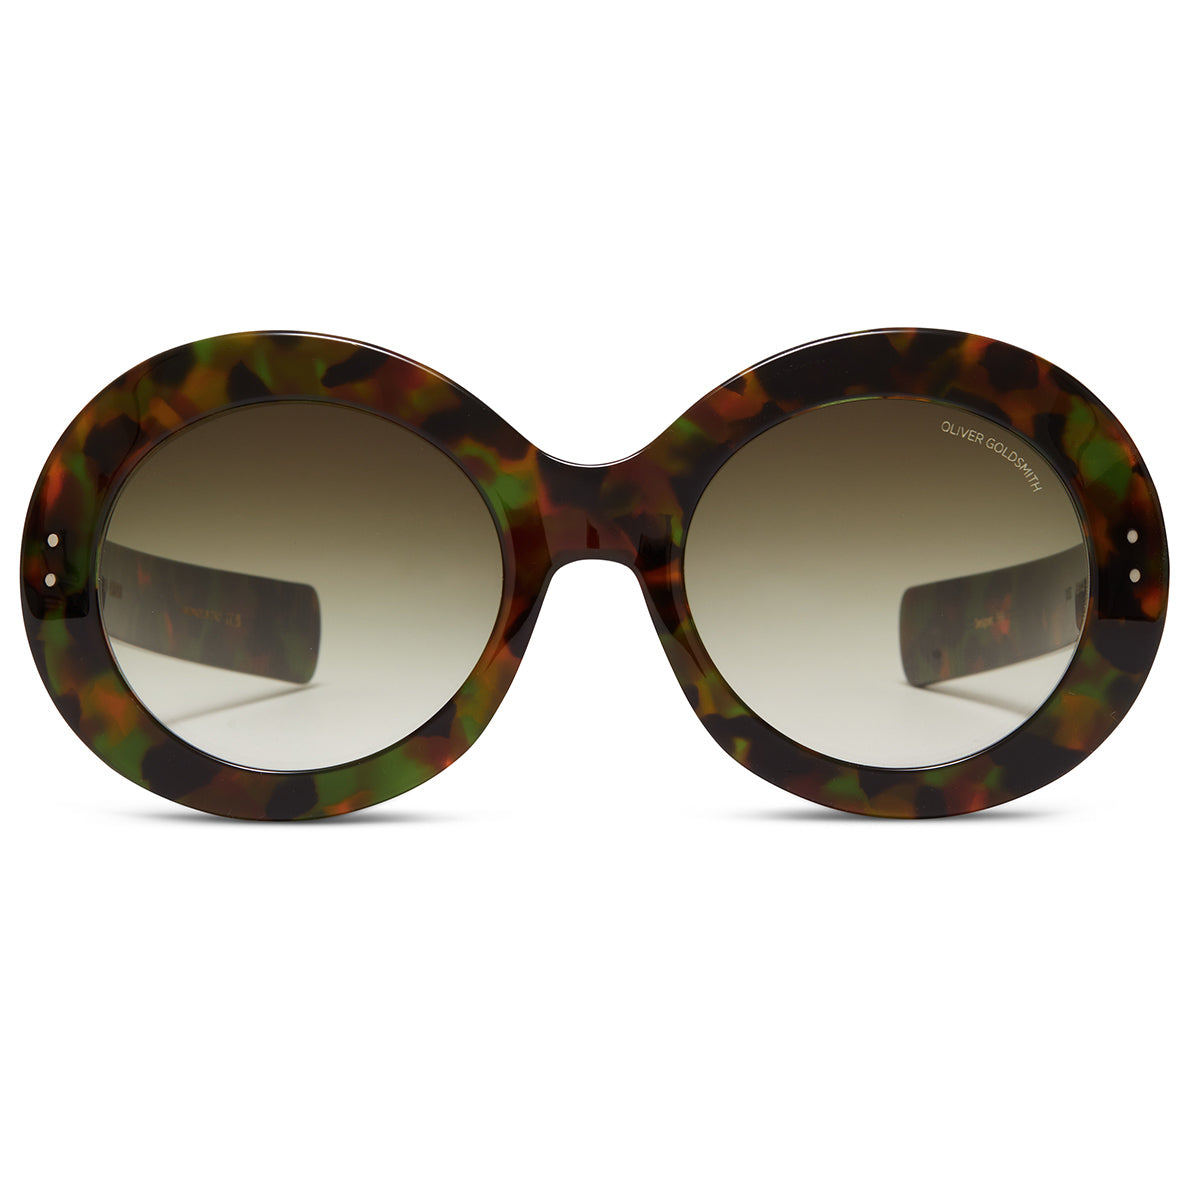 Koko Sunglasses with Jungle acetate frame